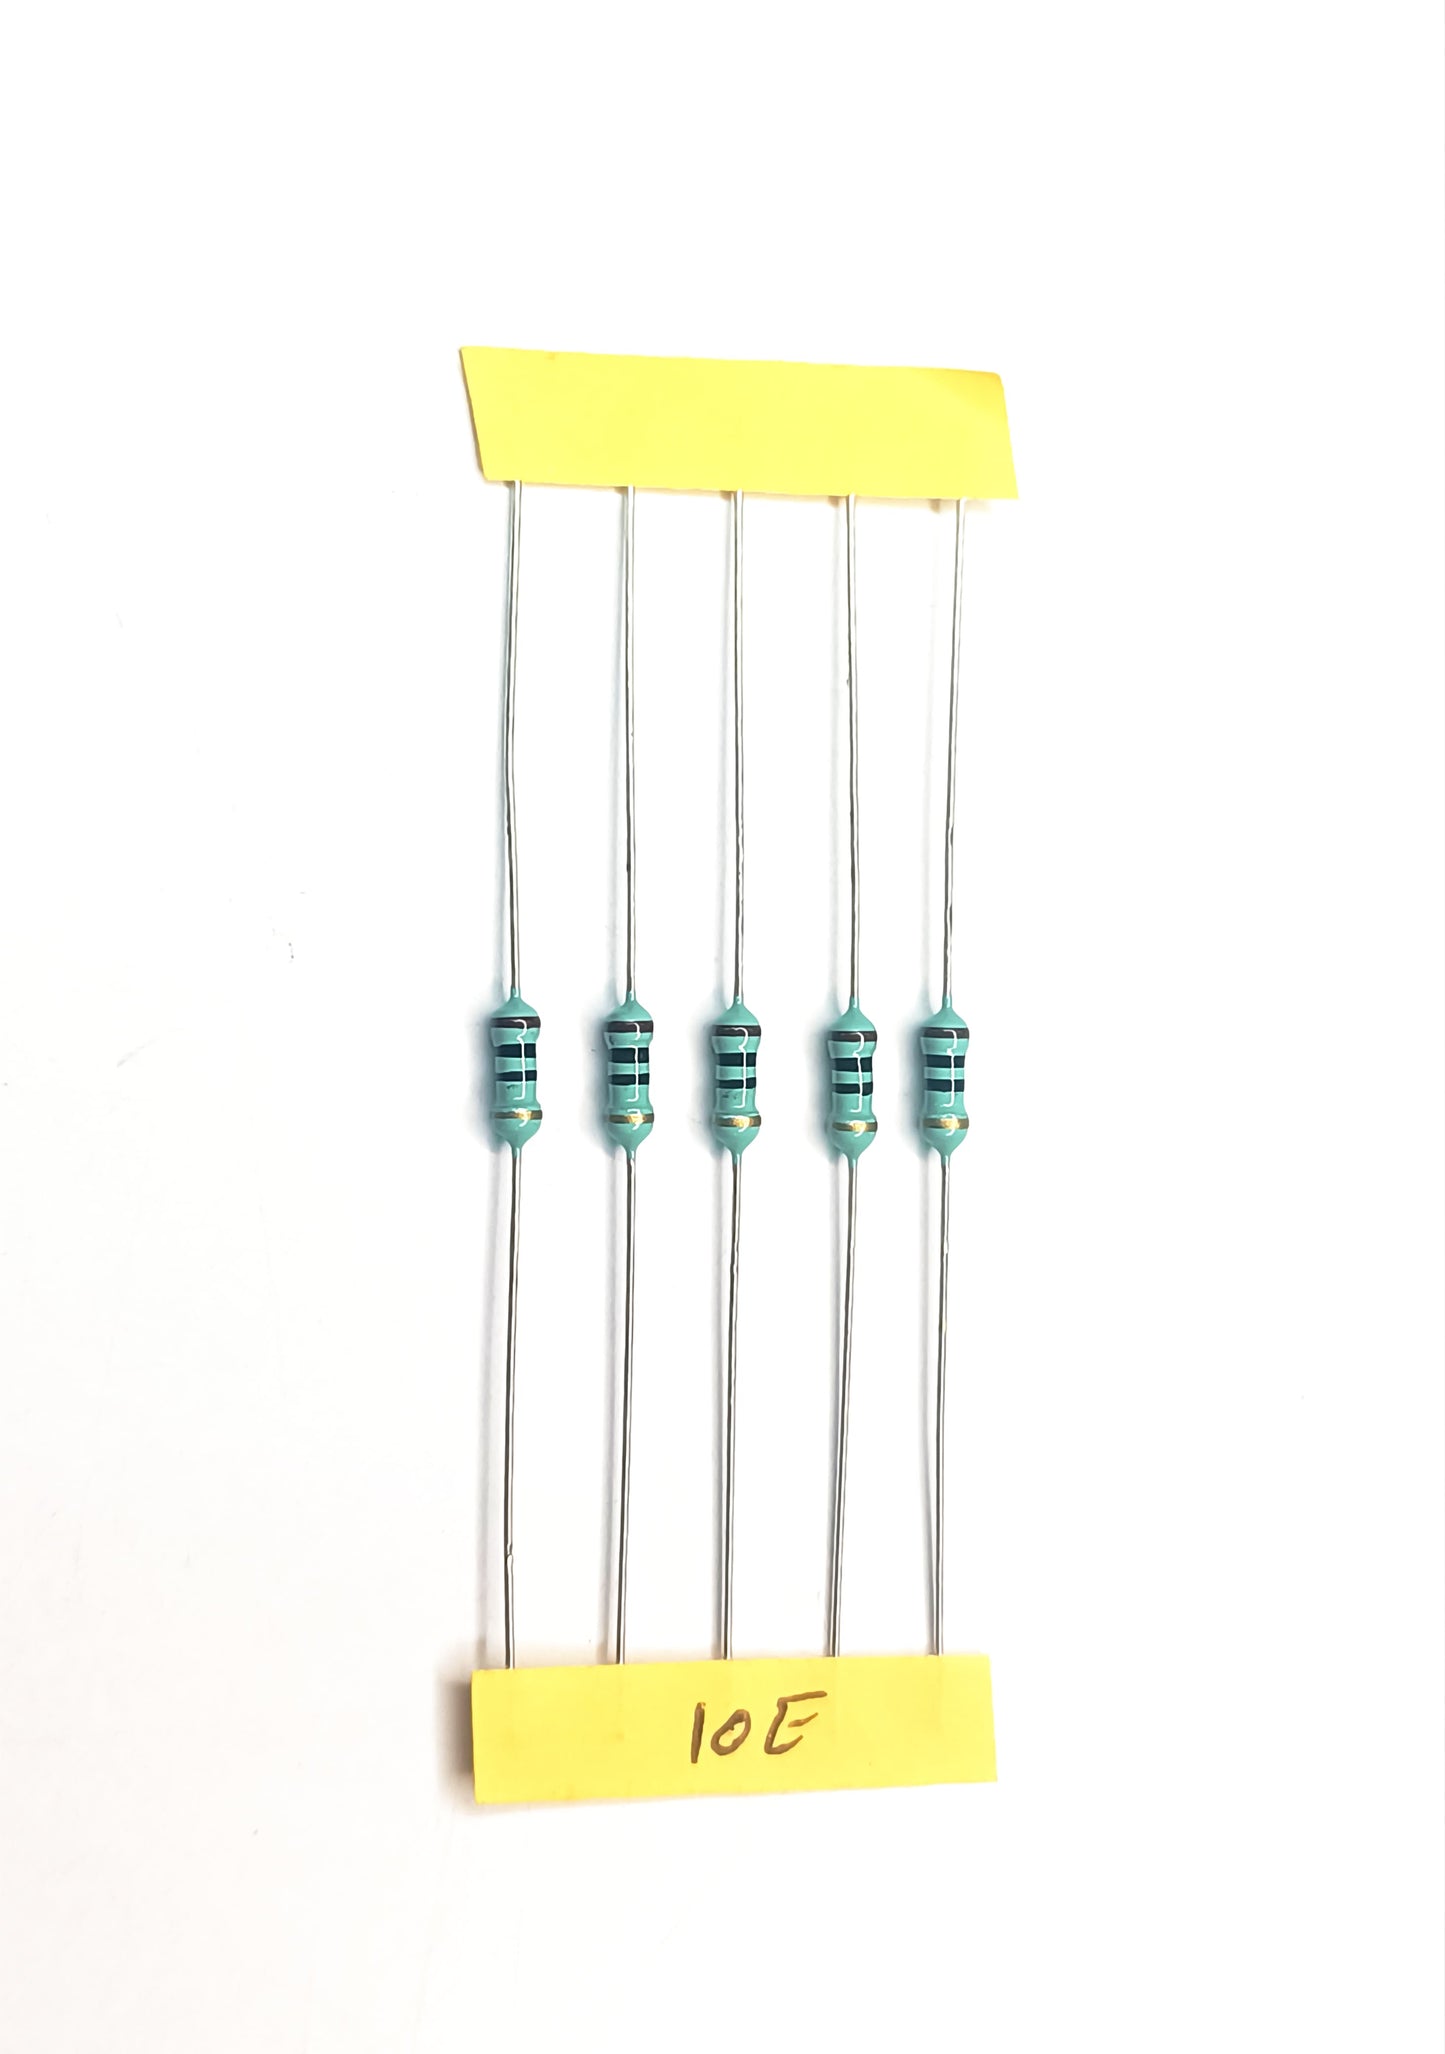 10 ohm Resistor-1/4 watt- 5 Pieces pack